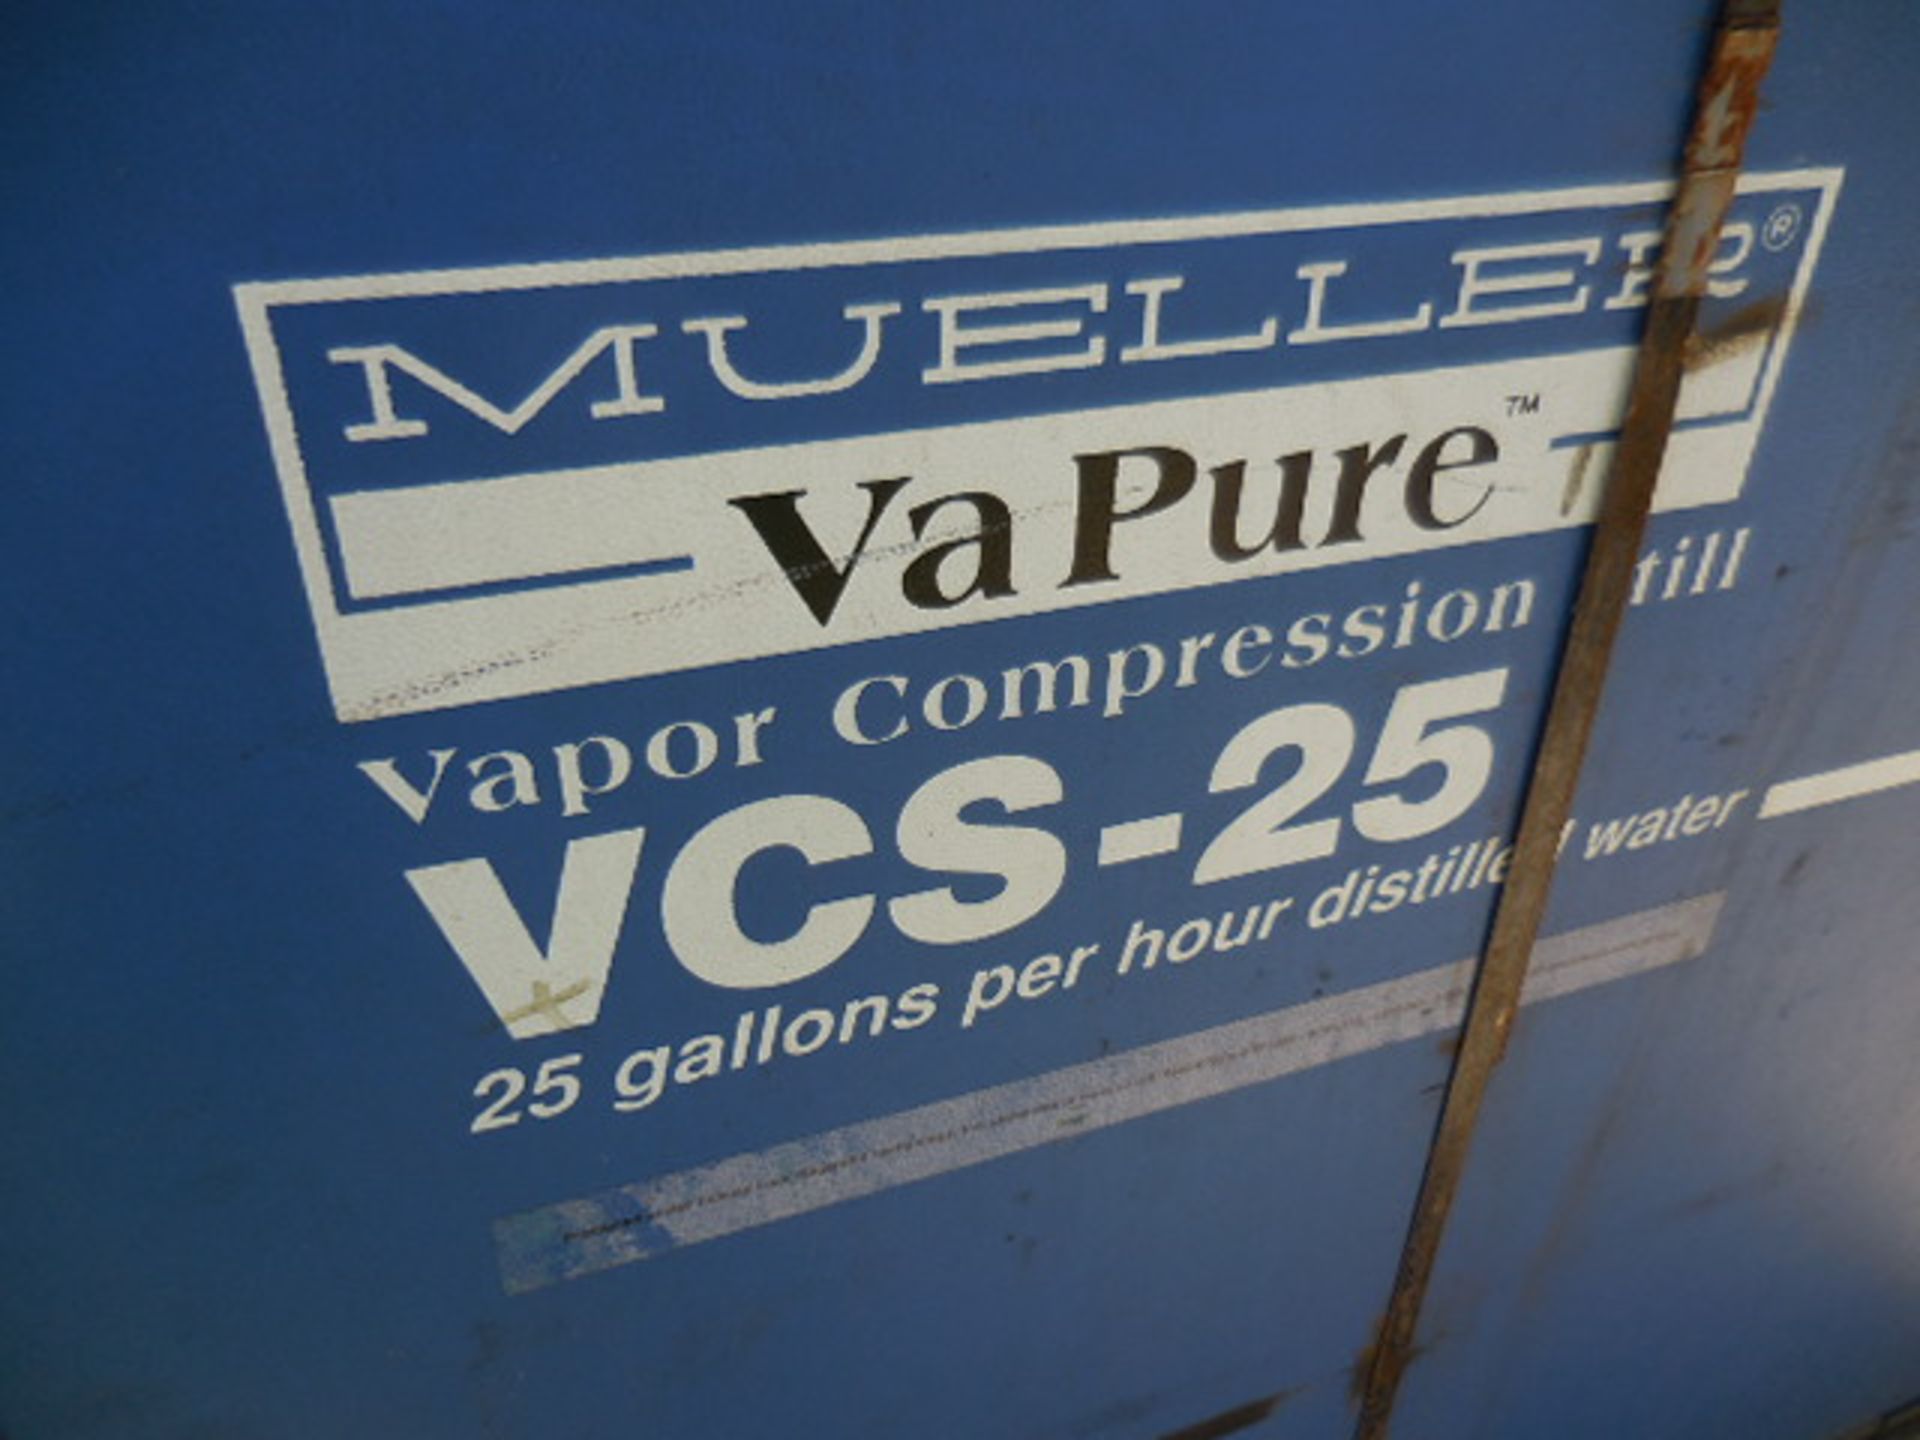 Mueller Vapure VCS-25 Vapor Compression Still , Model VCS-25 8806535, SN 25867A - Image 2 of 4